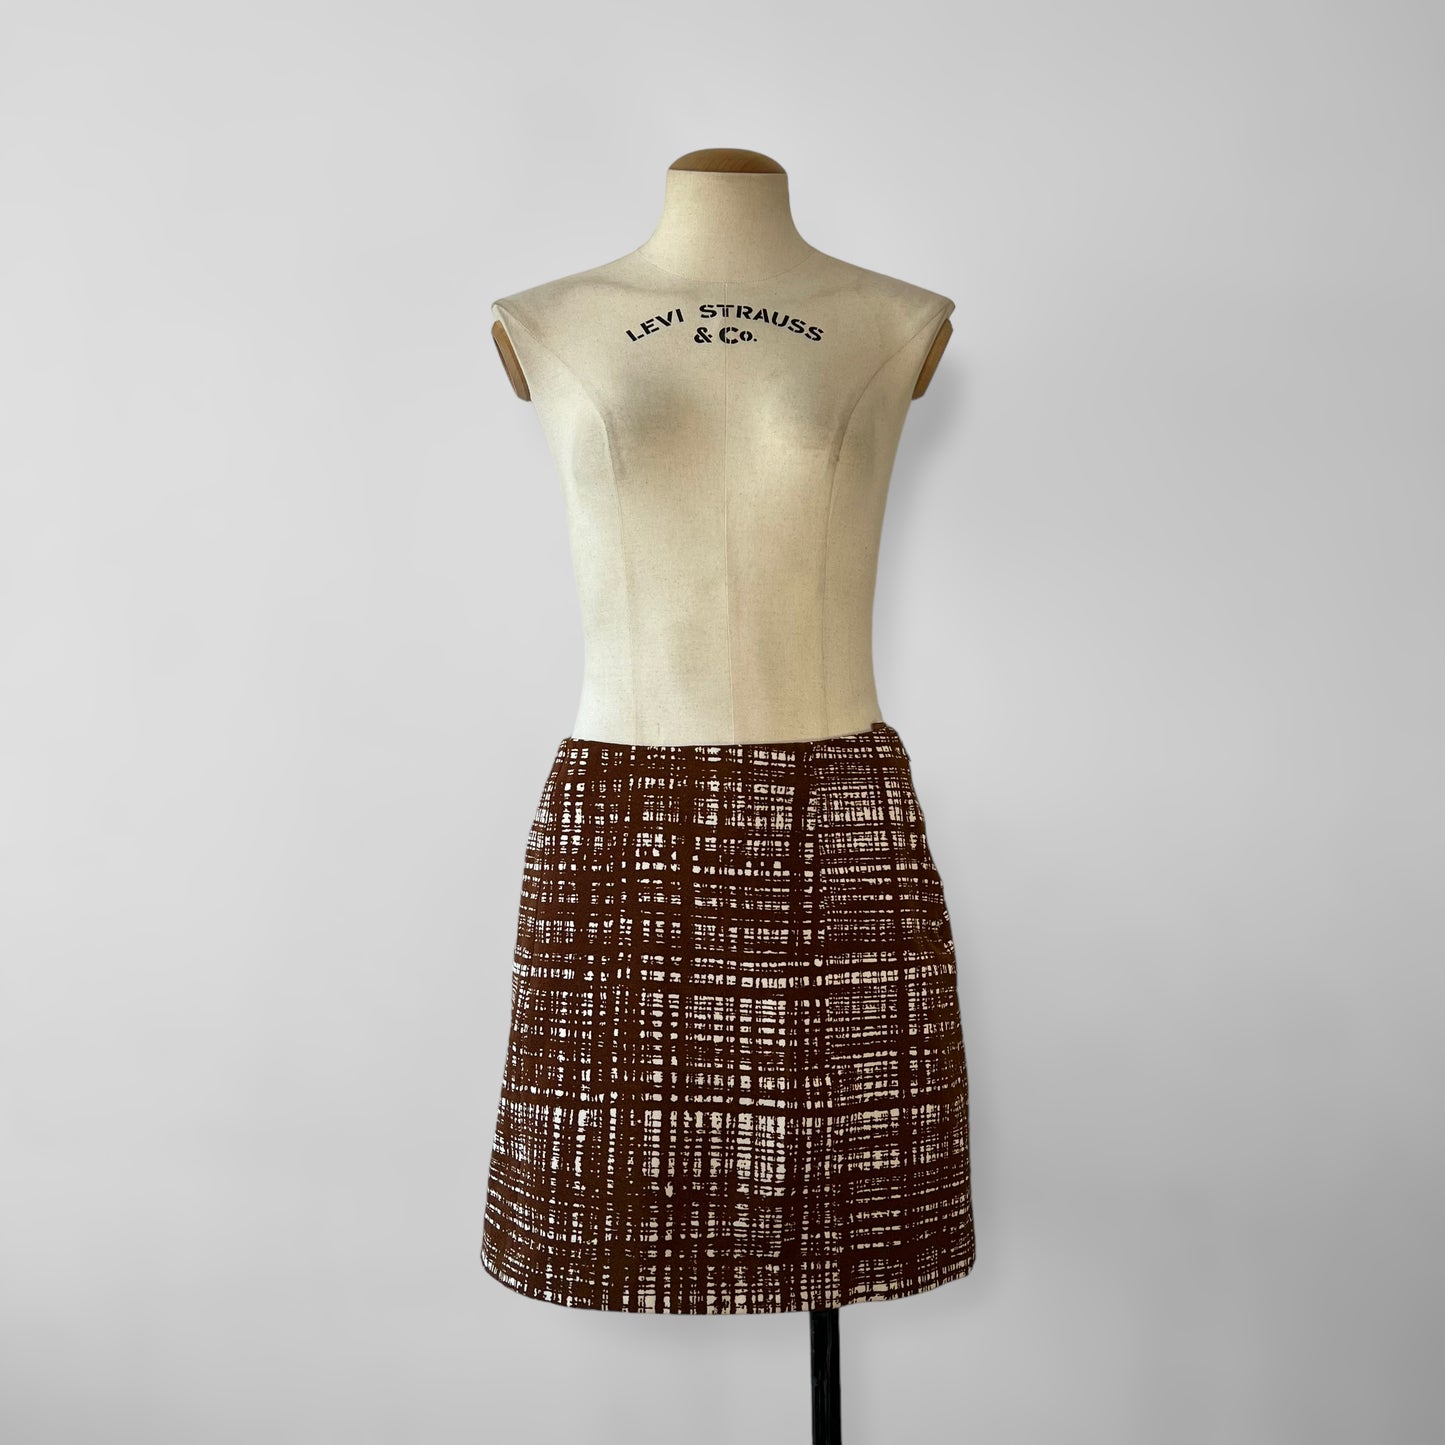 Prada 1996 skirt